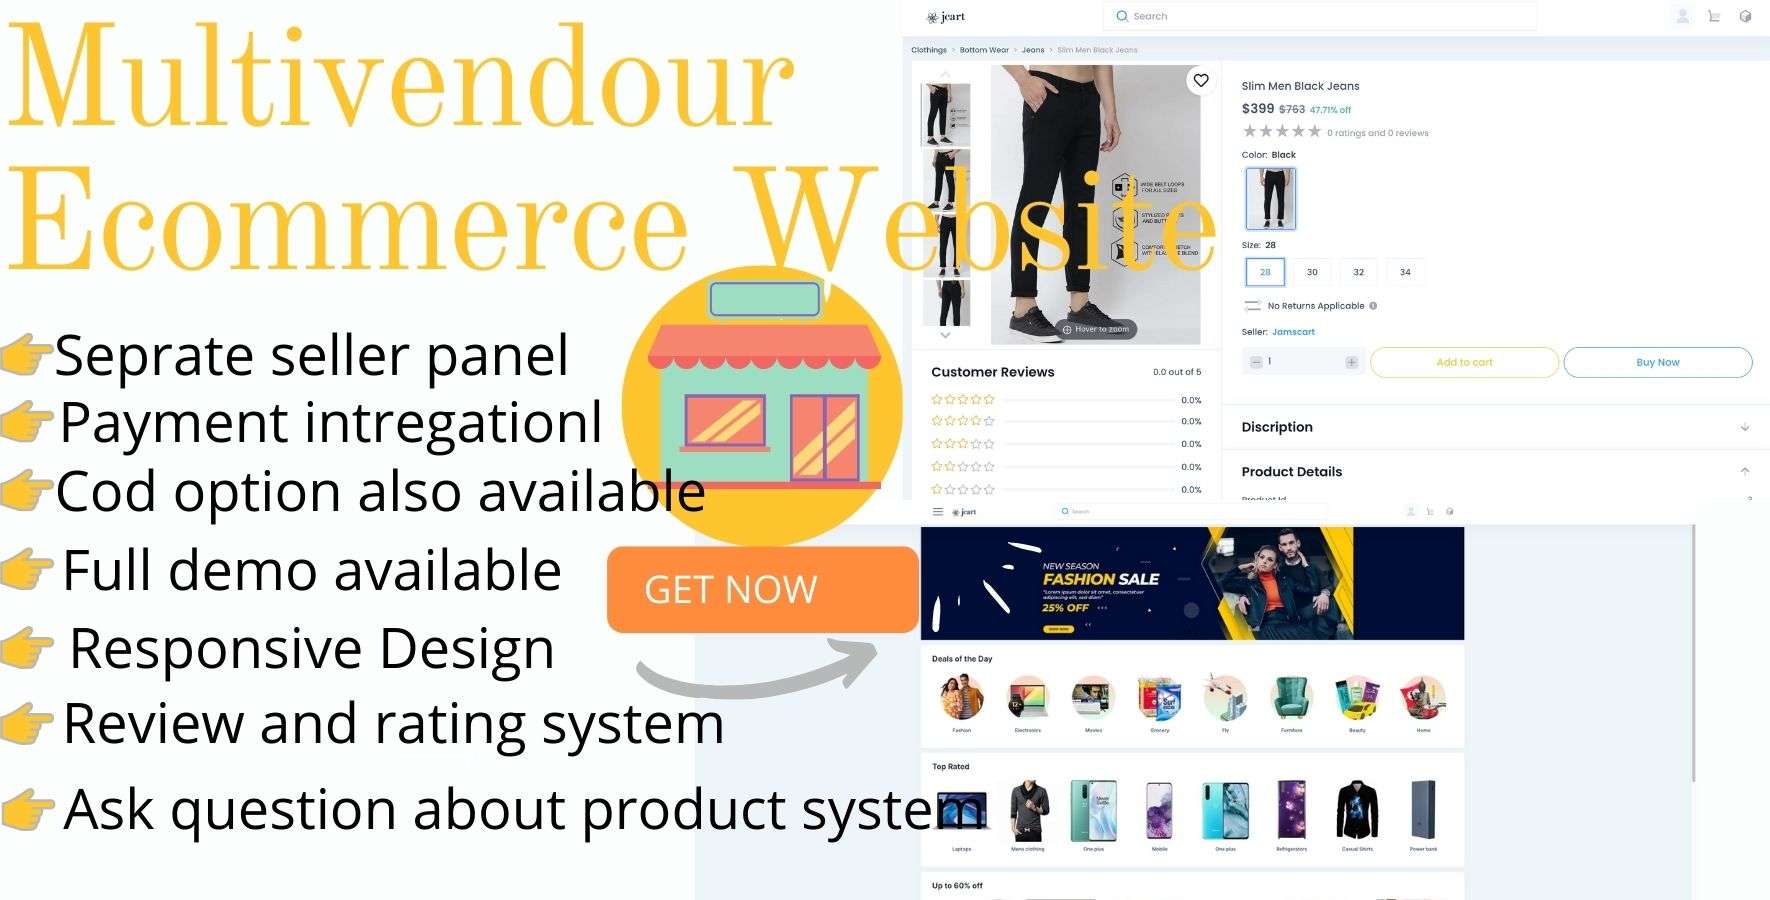 Multi vendor ECommerce Website